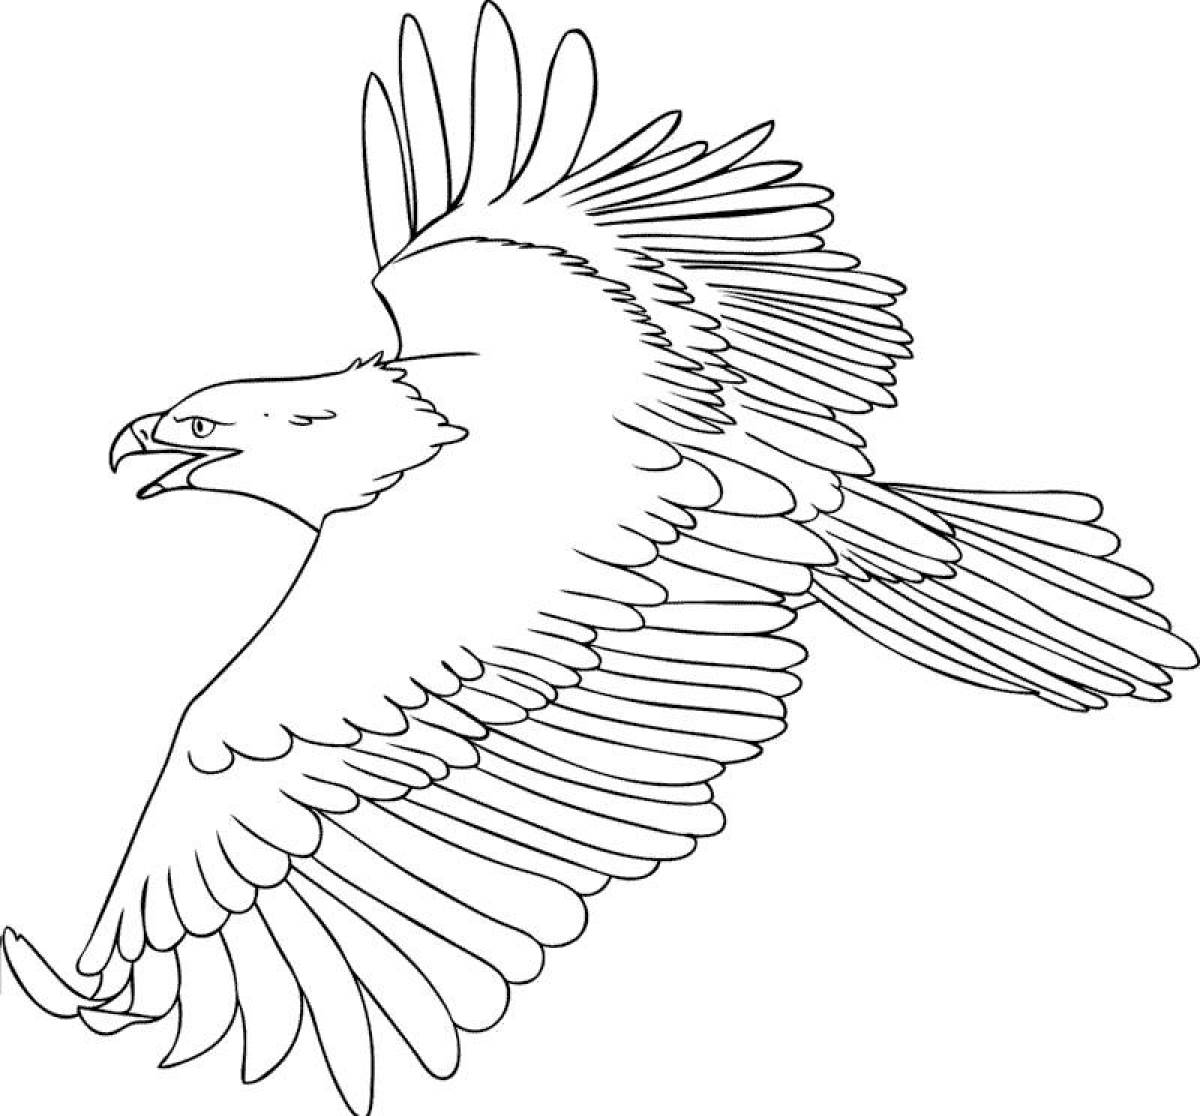 Eagle flight